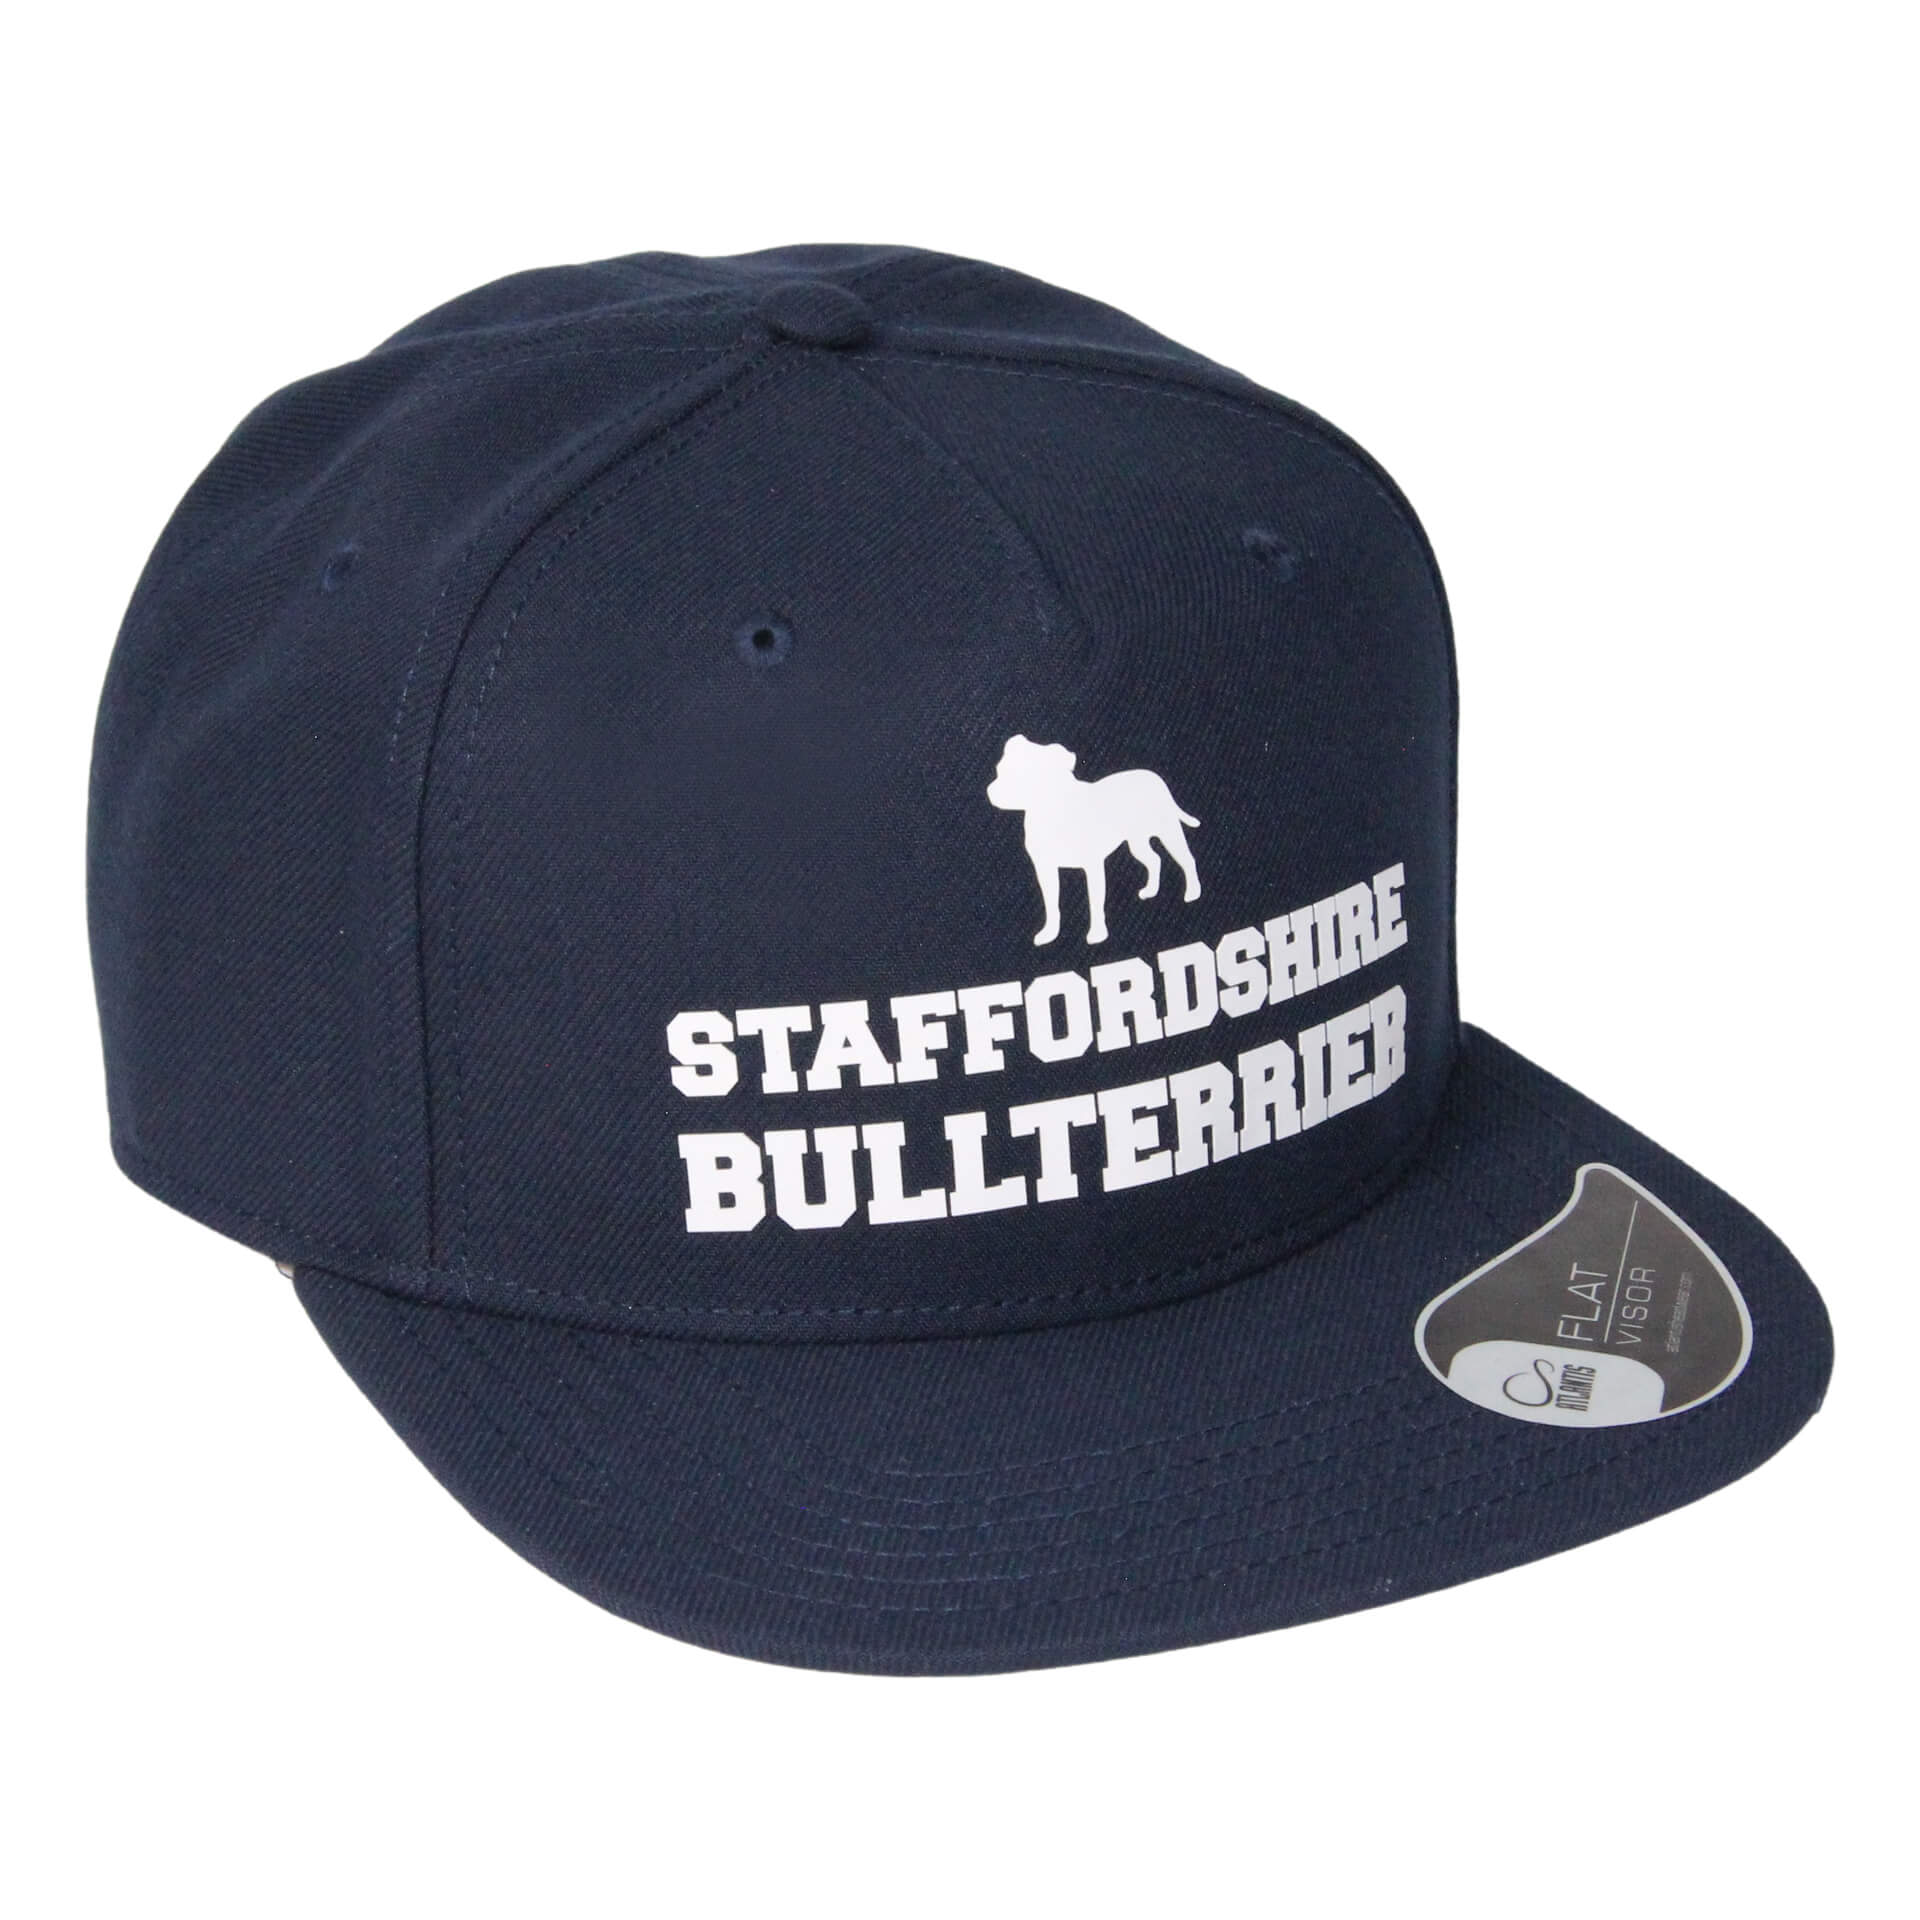 Staffordshire Bullterrier Cap Tag blau rechts